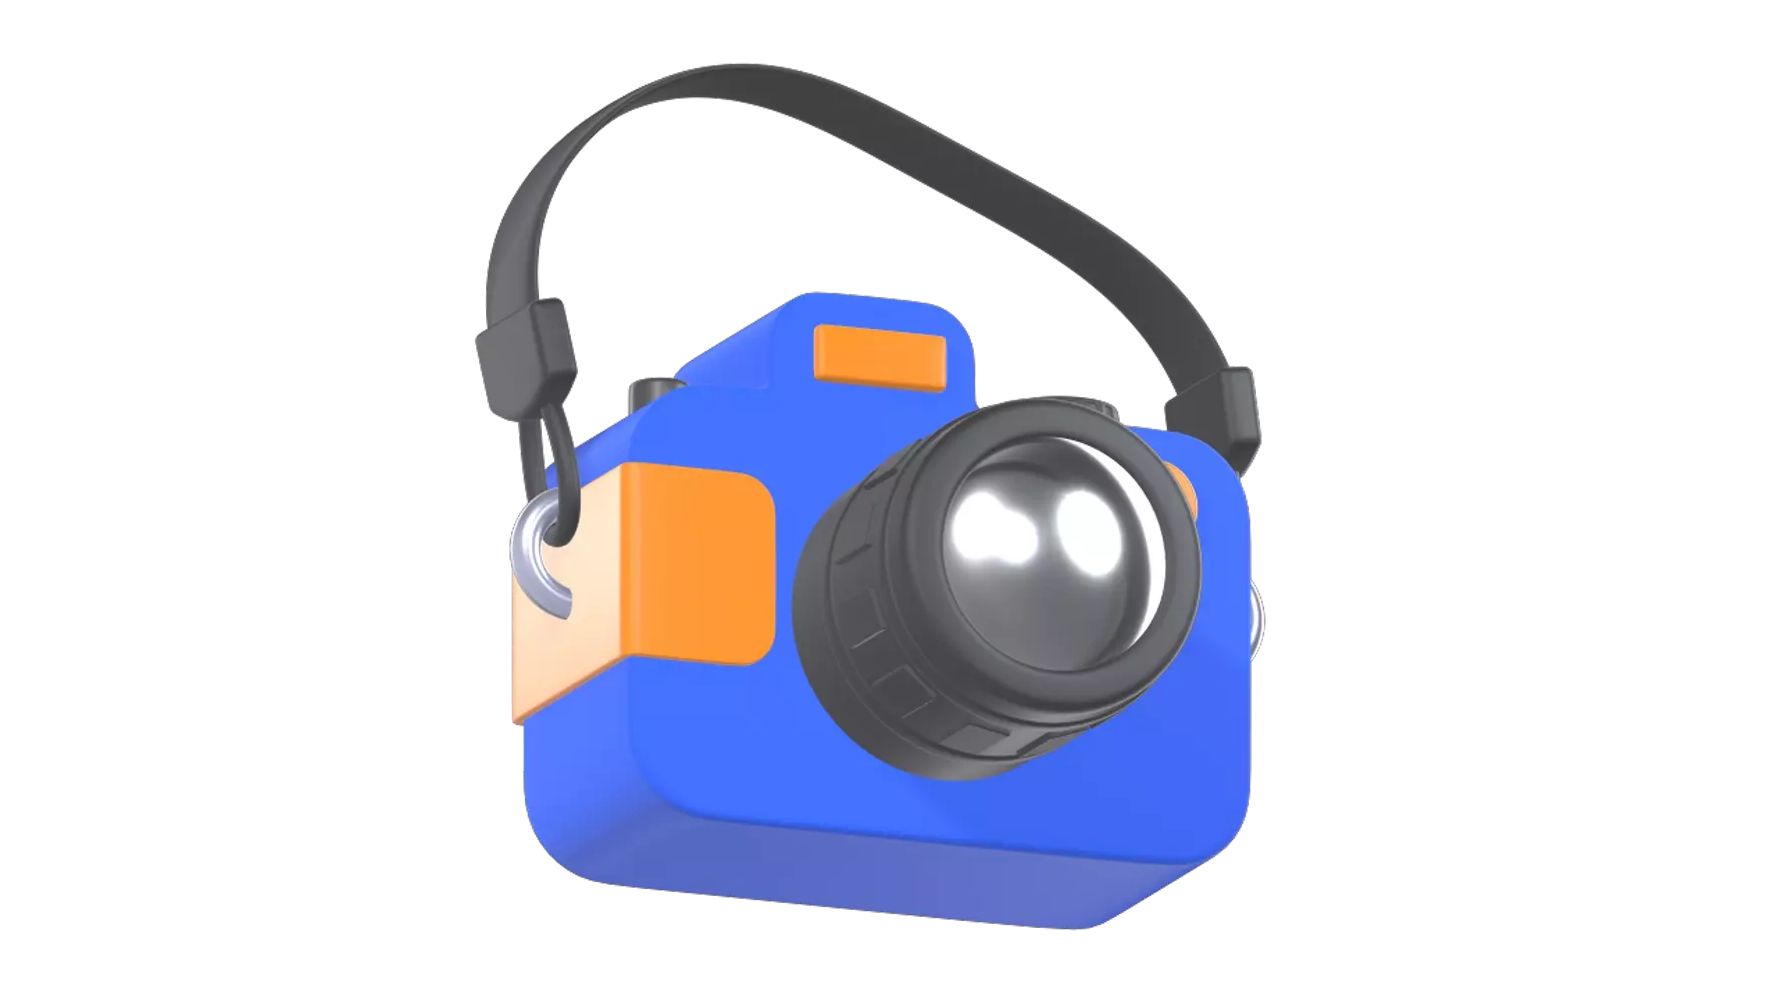 Camera 3D Graphic